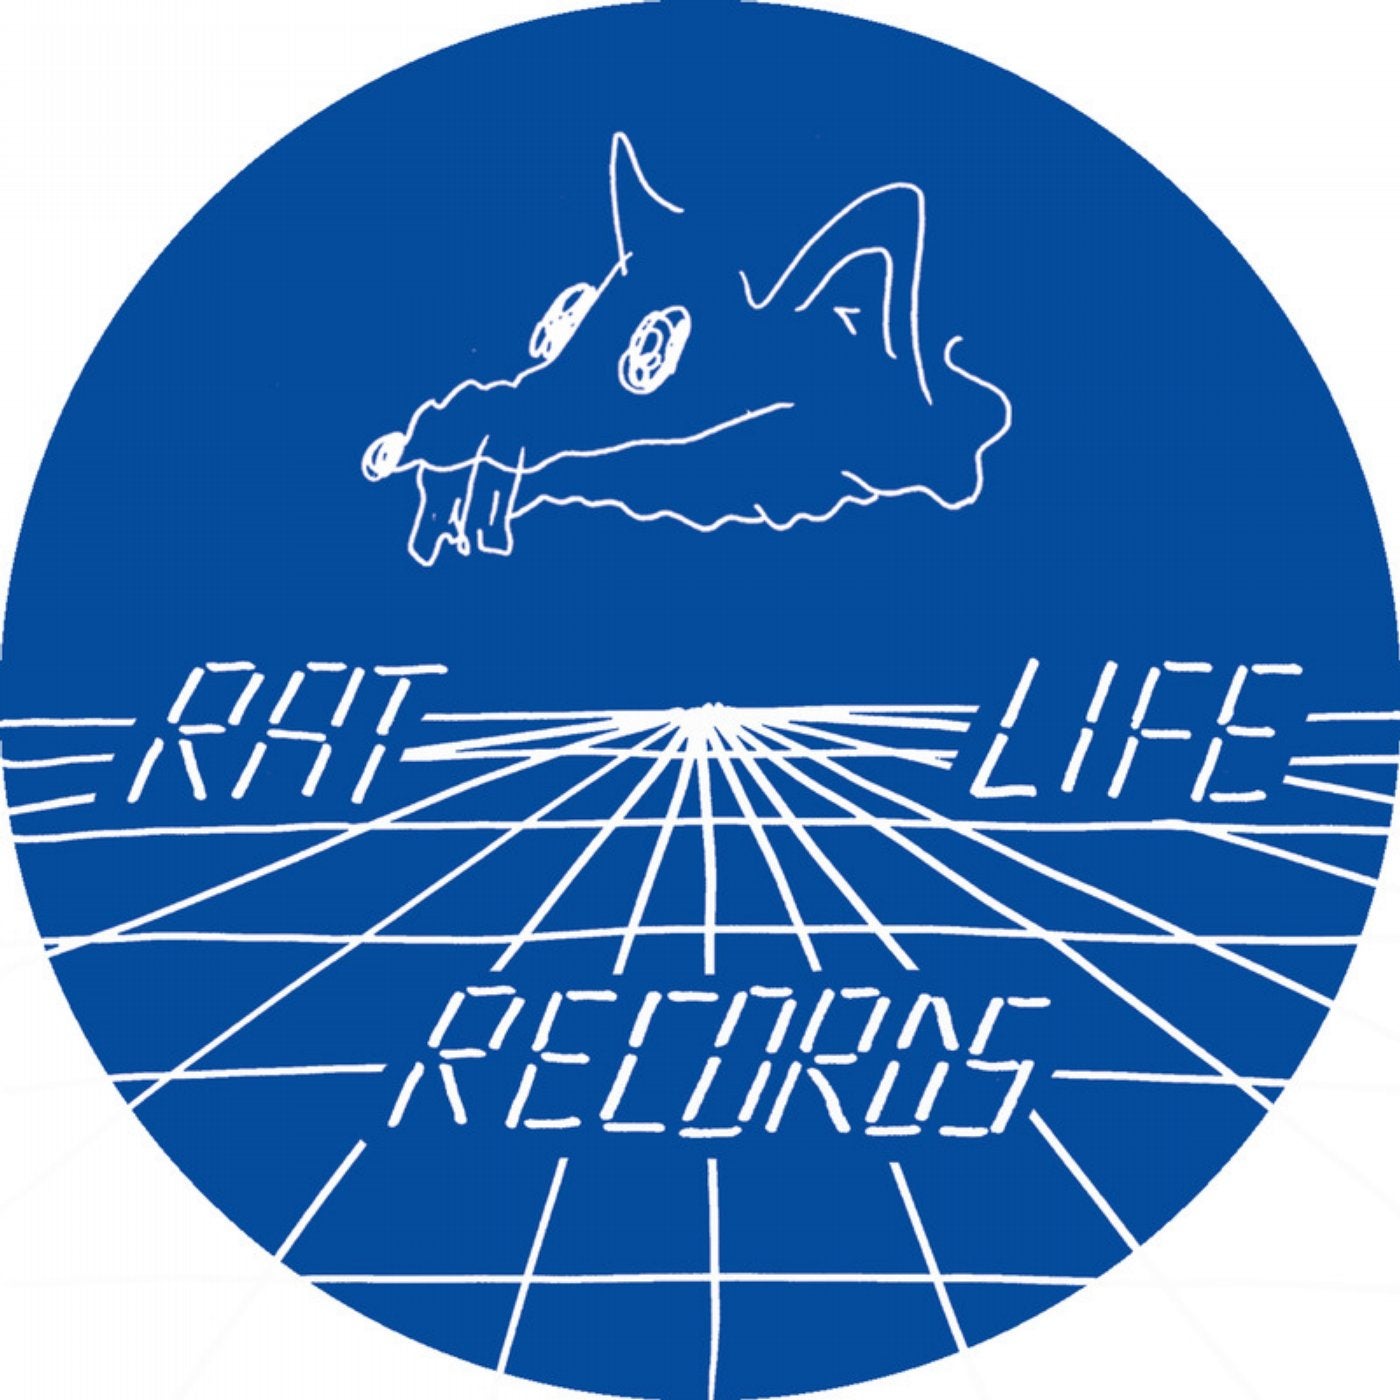 Rat Life 11 EP